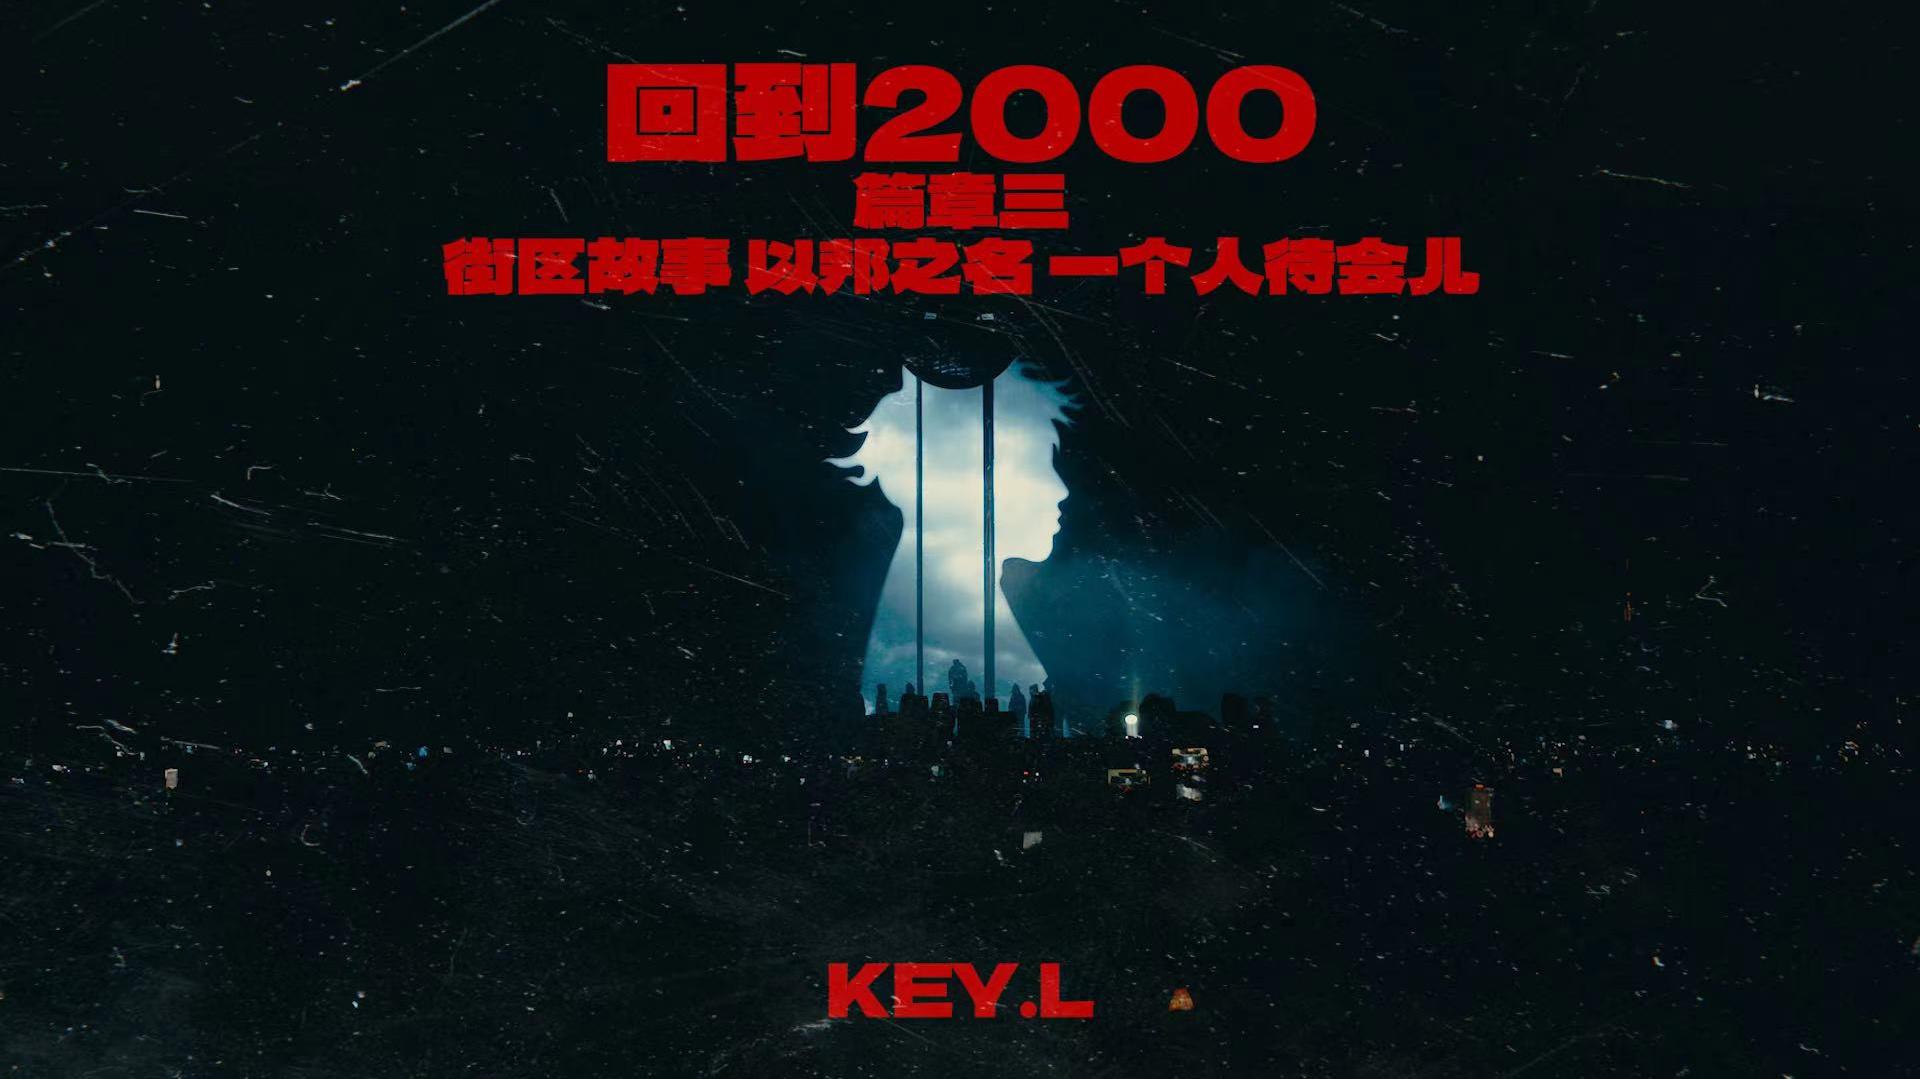 KEY.L刘聪 - 《回到2000》演唱会「长沙站」LIVE VIDEO 篇章三-街区故事+以邦之名+一个人待会儿